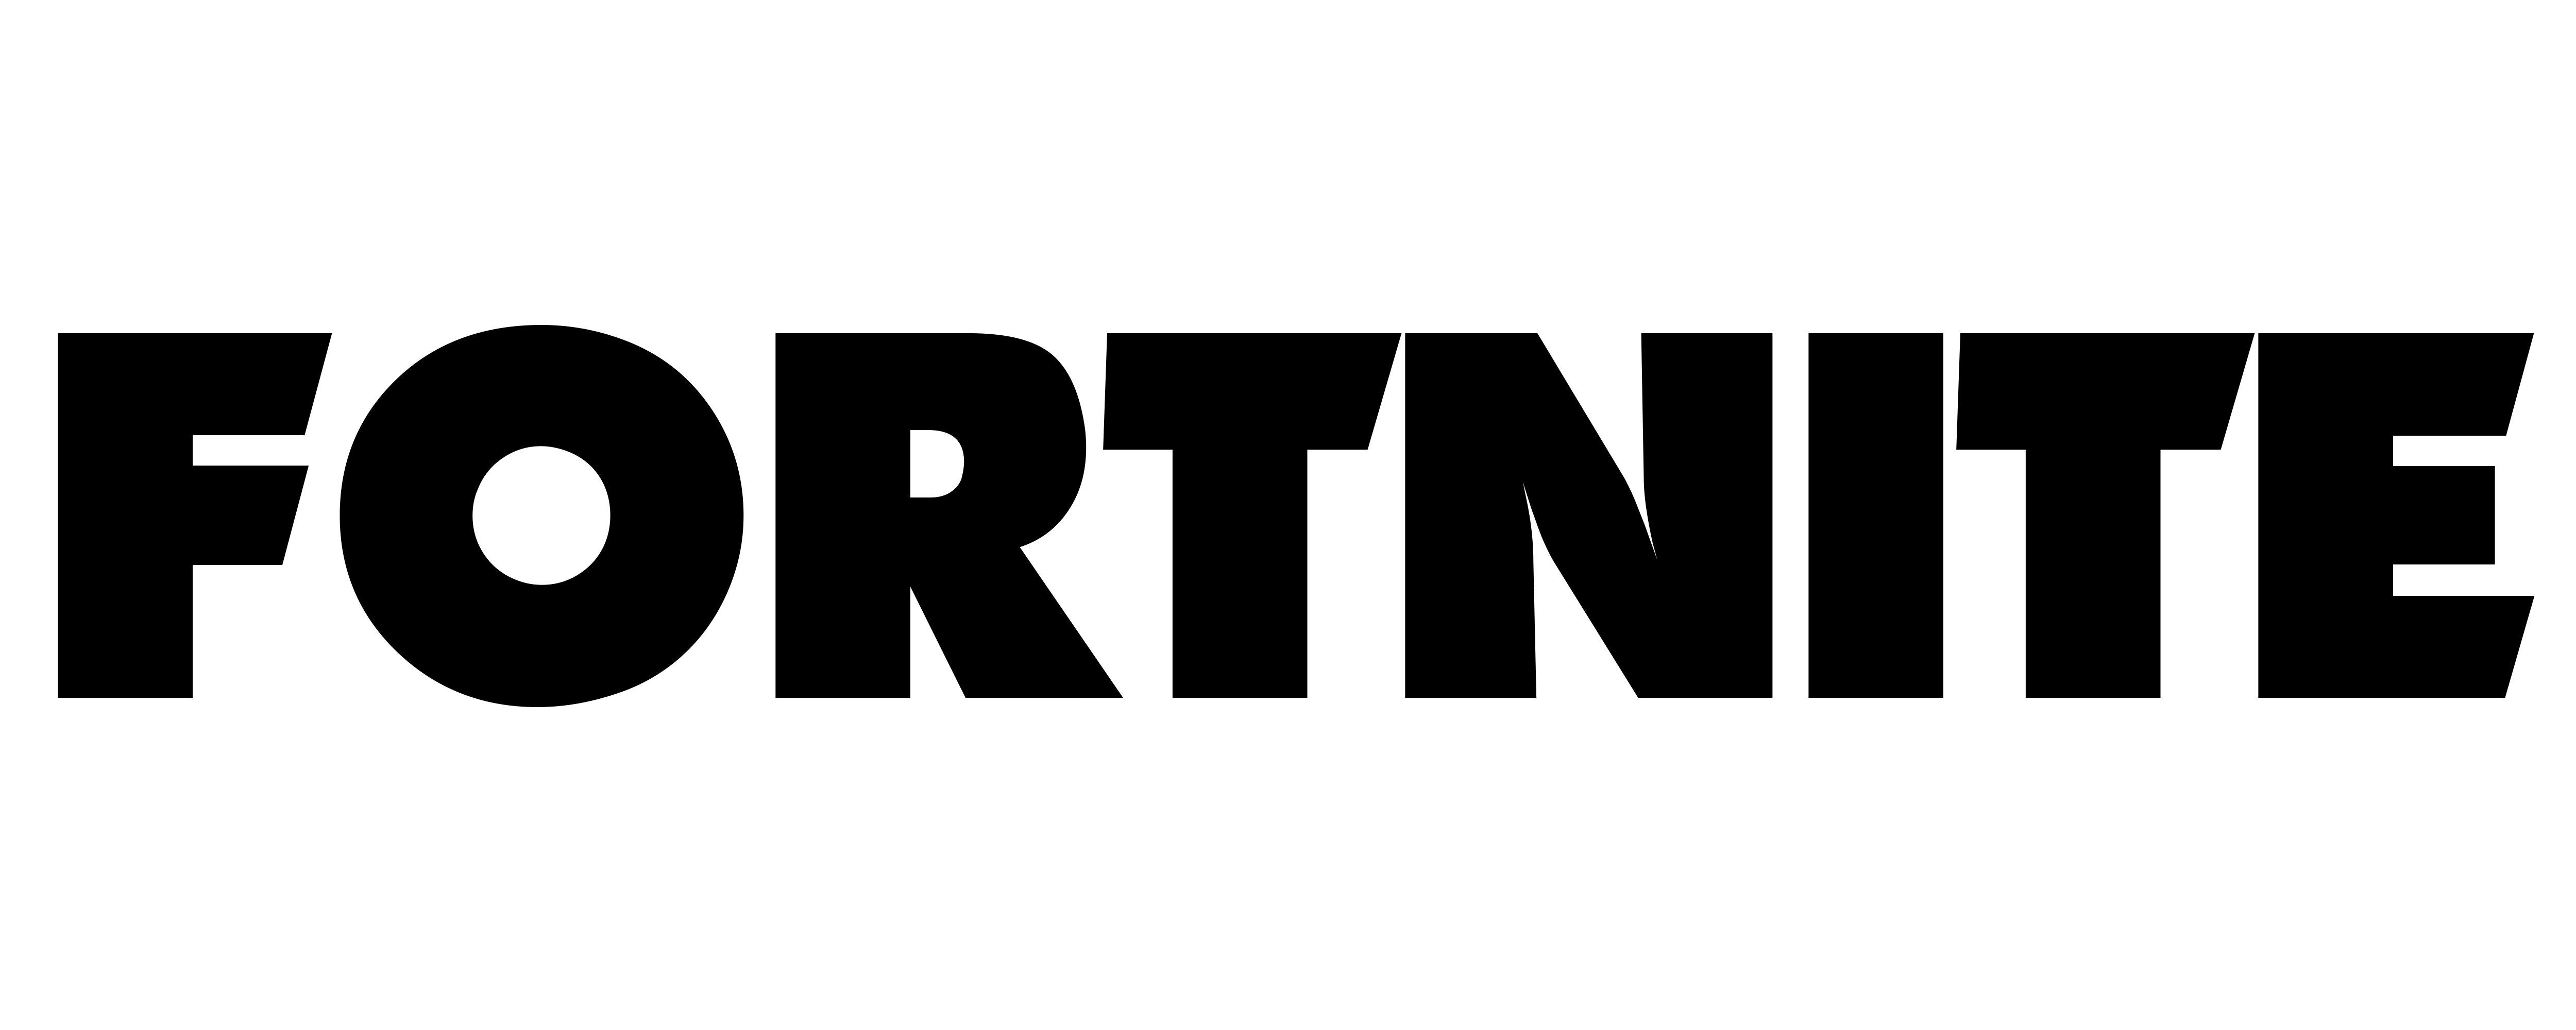 Fortnite Logo PNG Image - PurePNG | Free transparent CC0 PNG Image Library